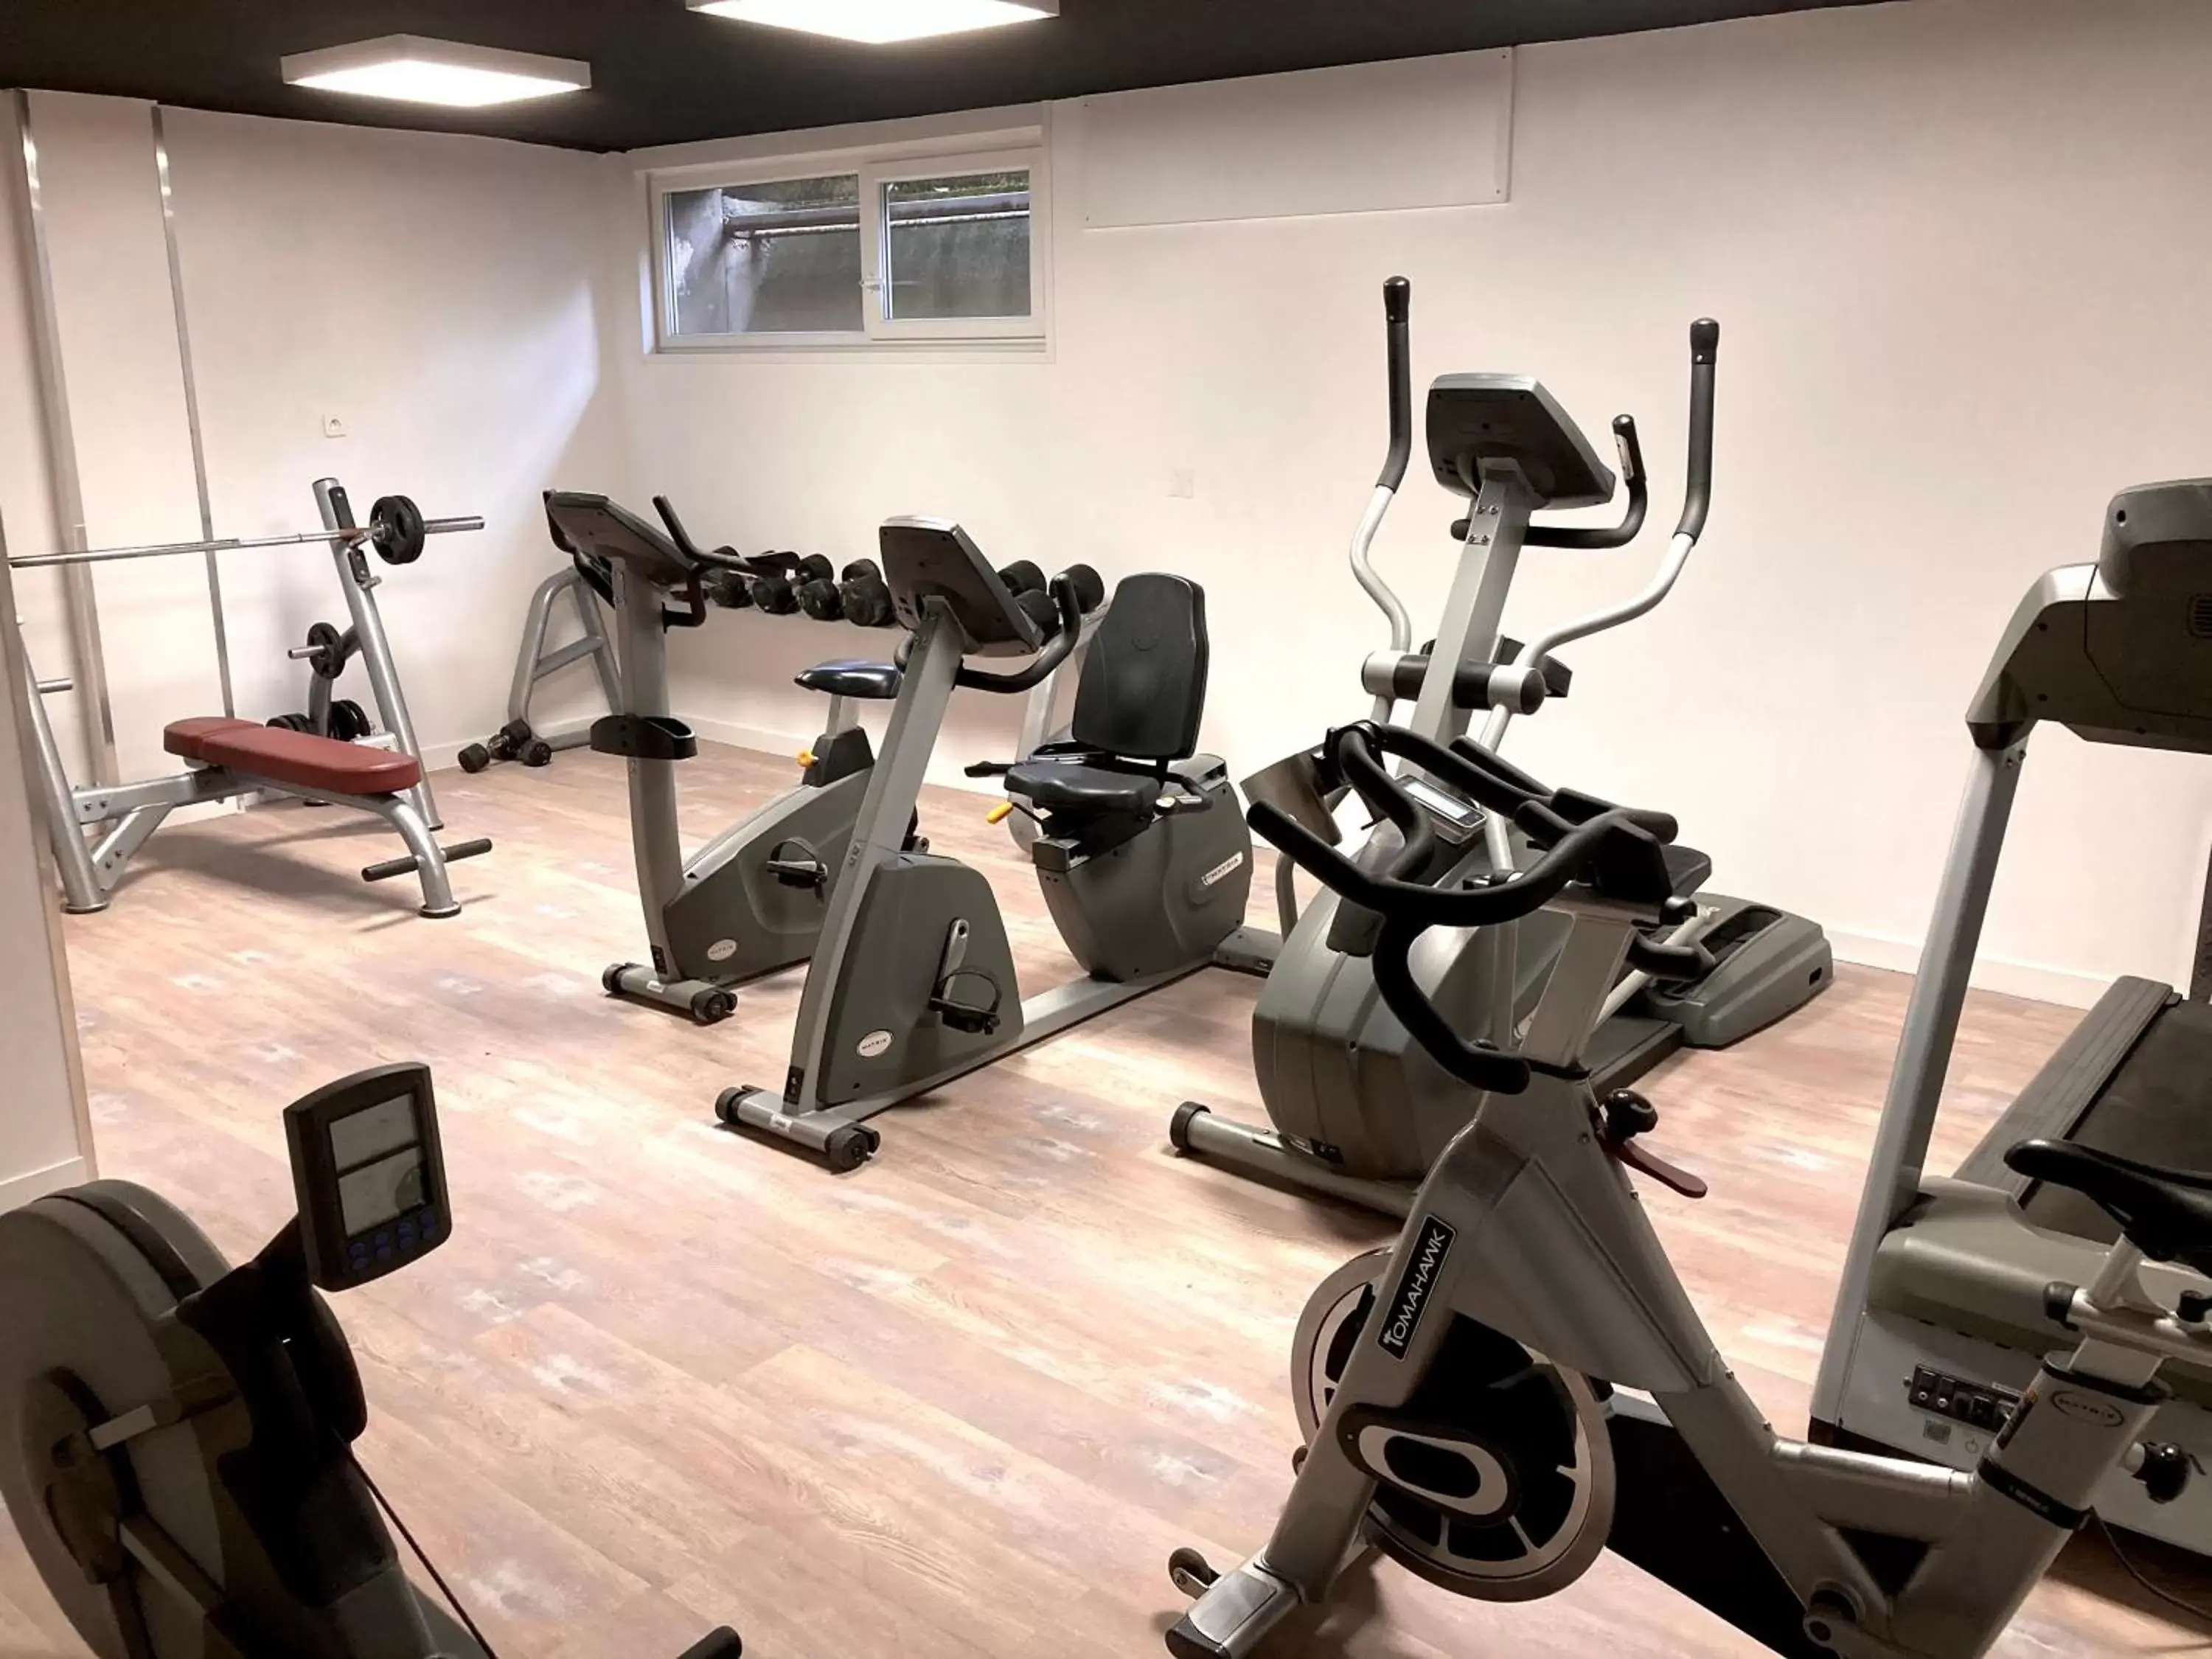 Fitness centre/facilities, Fitness Center/Facilities in The Originals City, Hôtel Rive Droite, Albi "Quartier Madeleine"